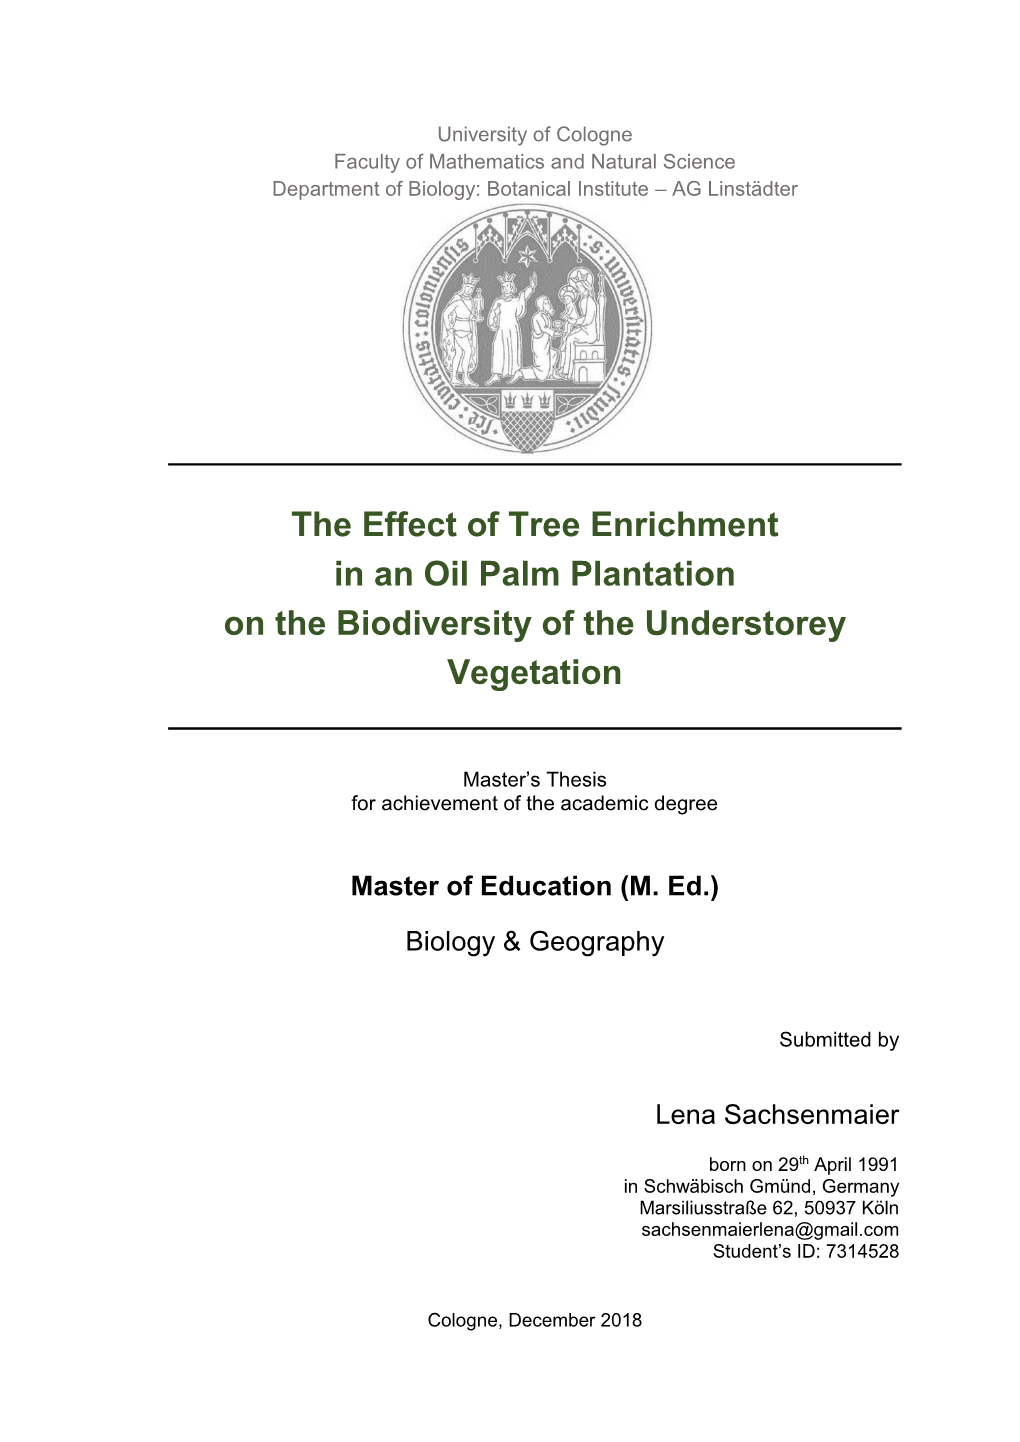 Biodiversity Enrichment in an Oil Palm Plantation – the EFFECT on the UNDERSTOREY VEGETATION